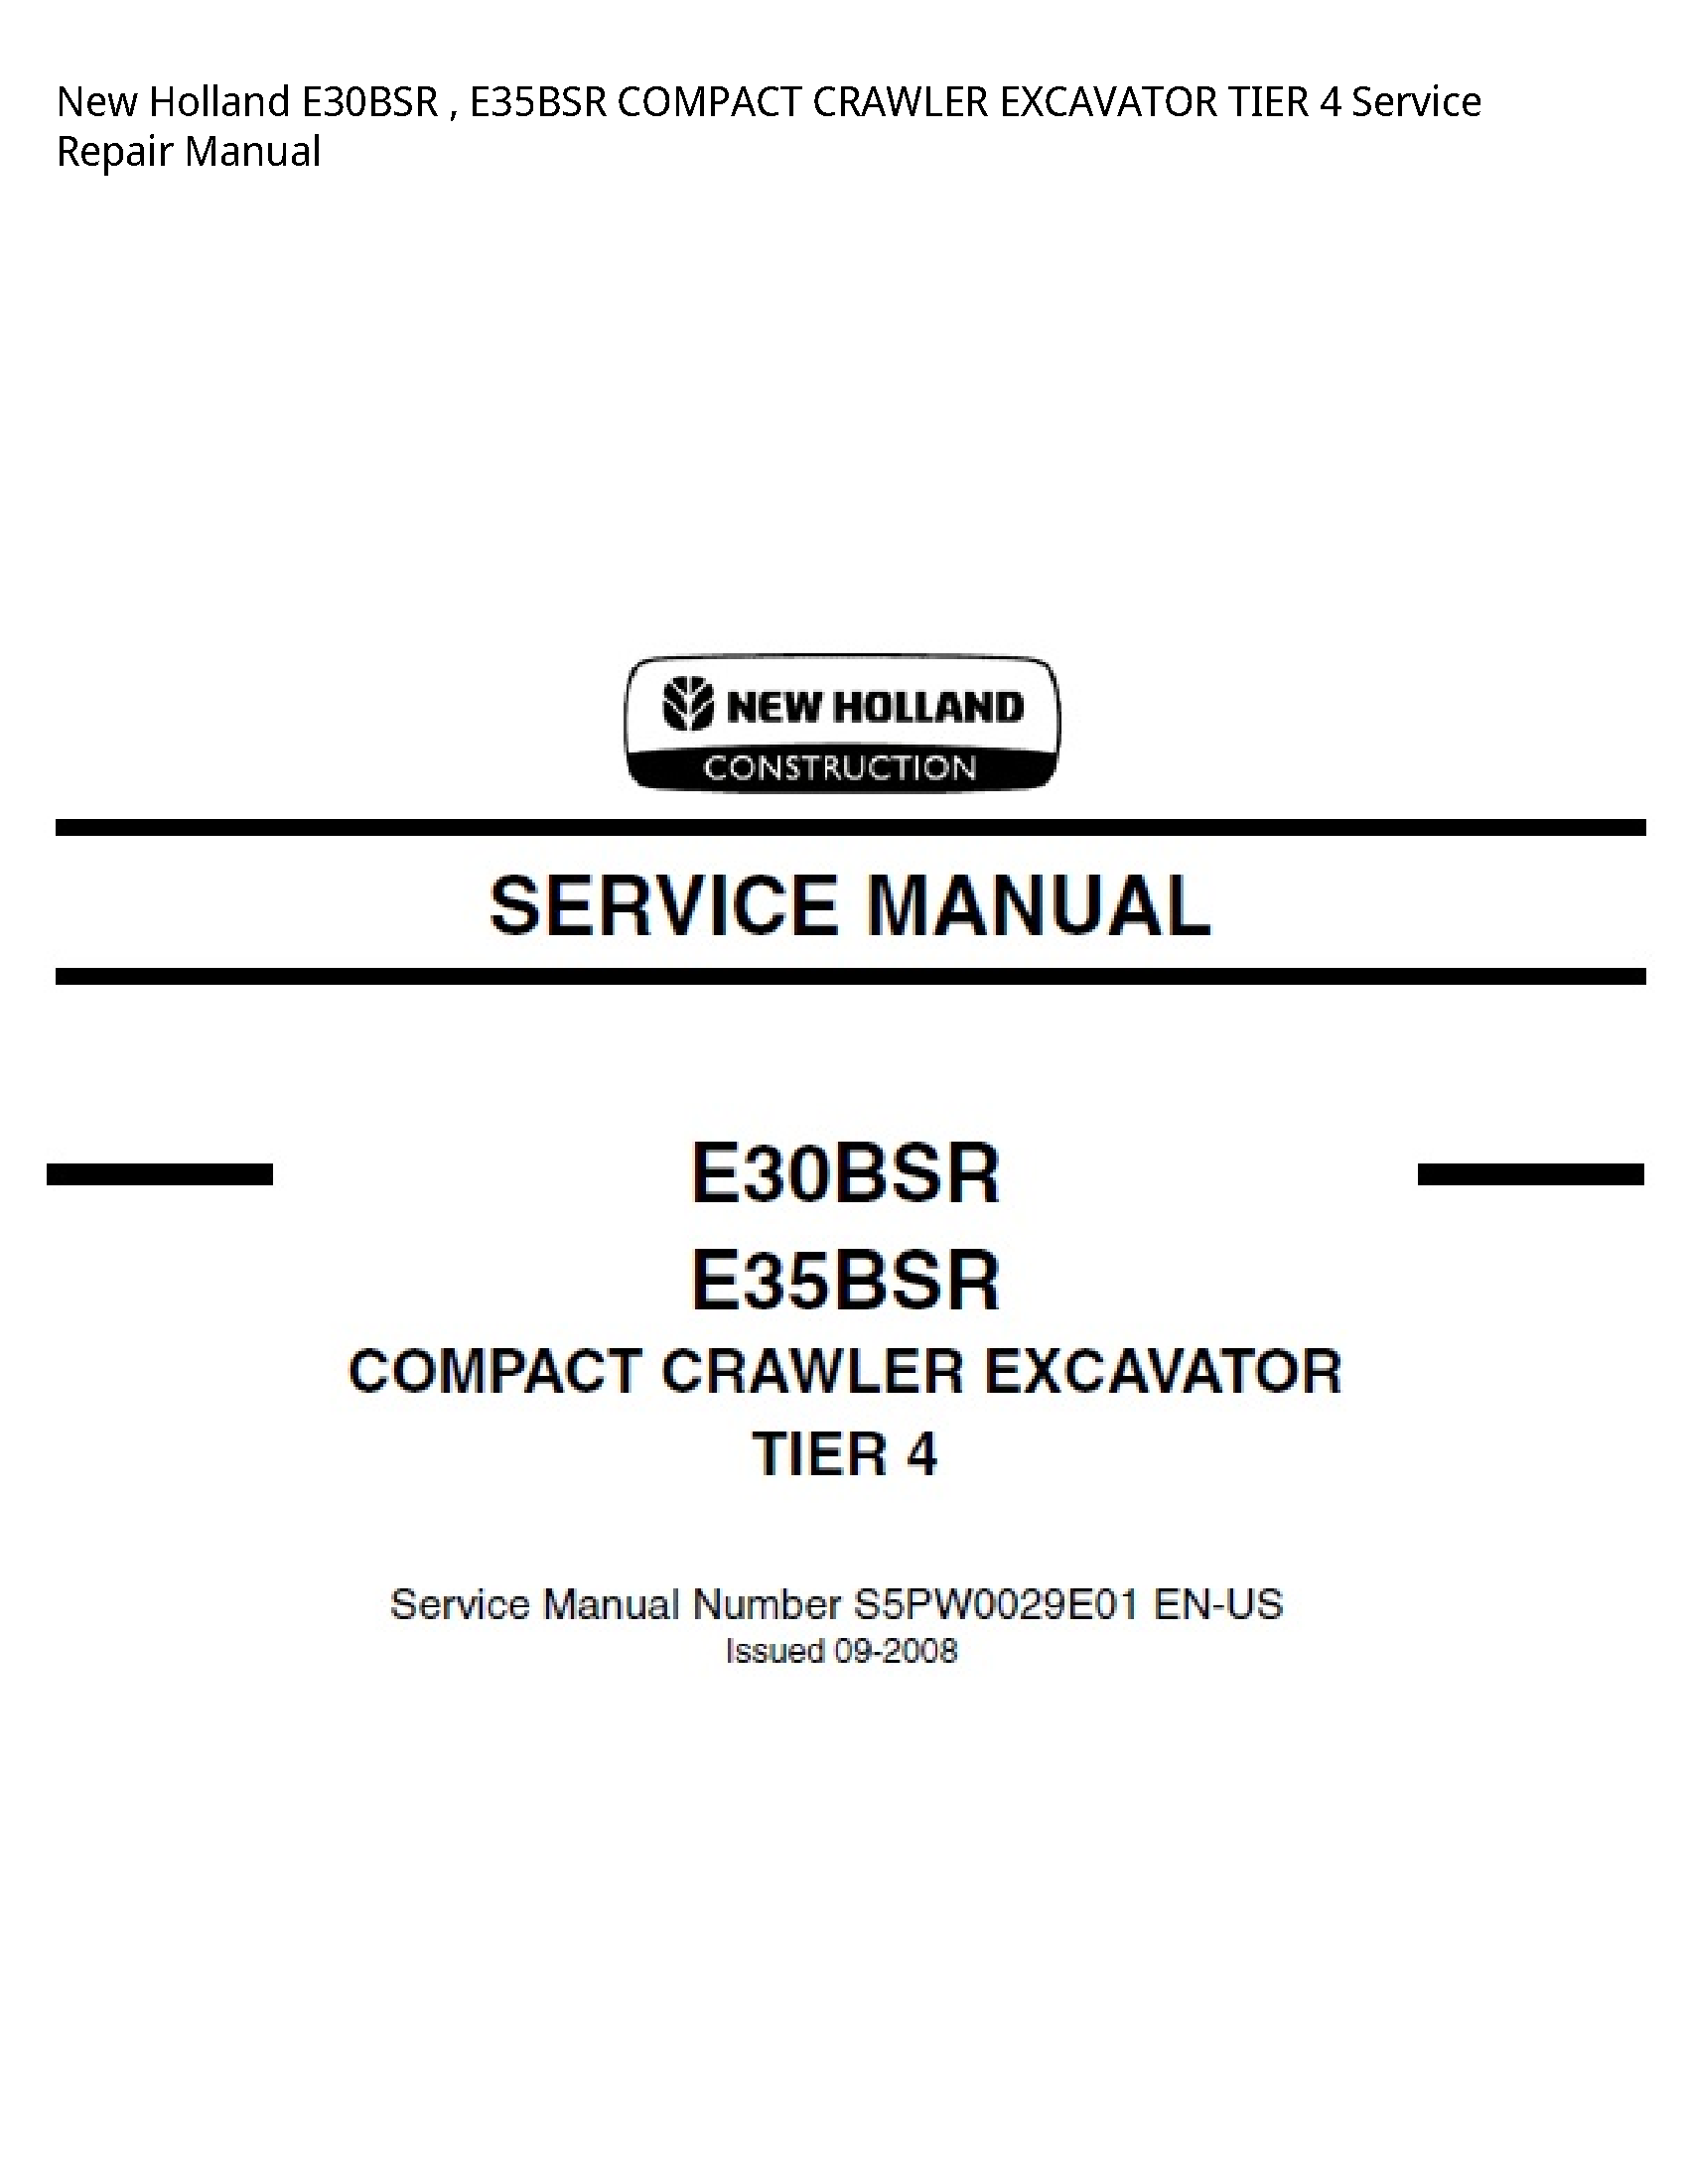 New Holland E30BSR COMPACT CRAWLER EXCAVATOR TIER manual